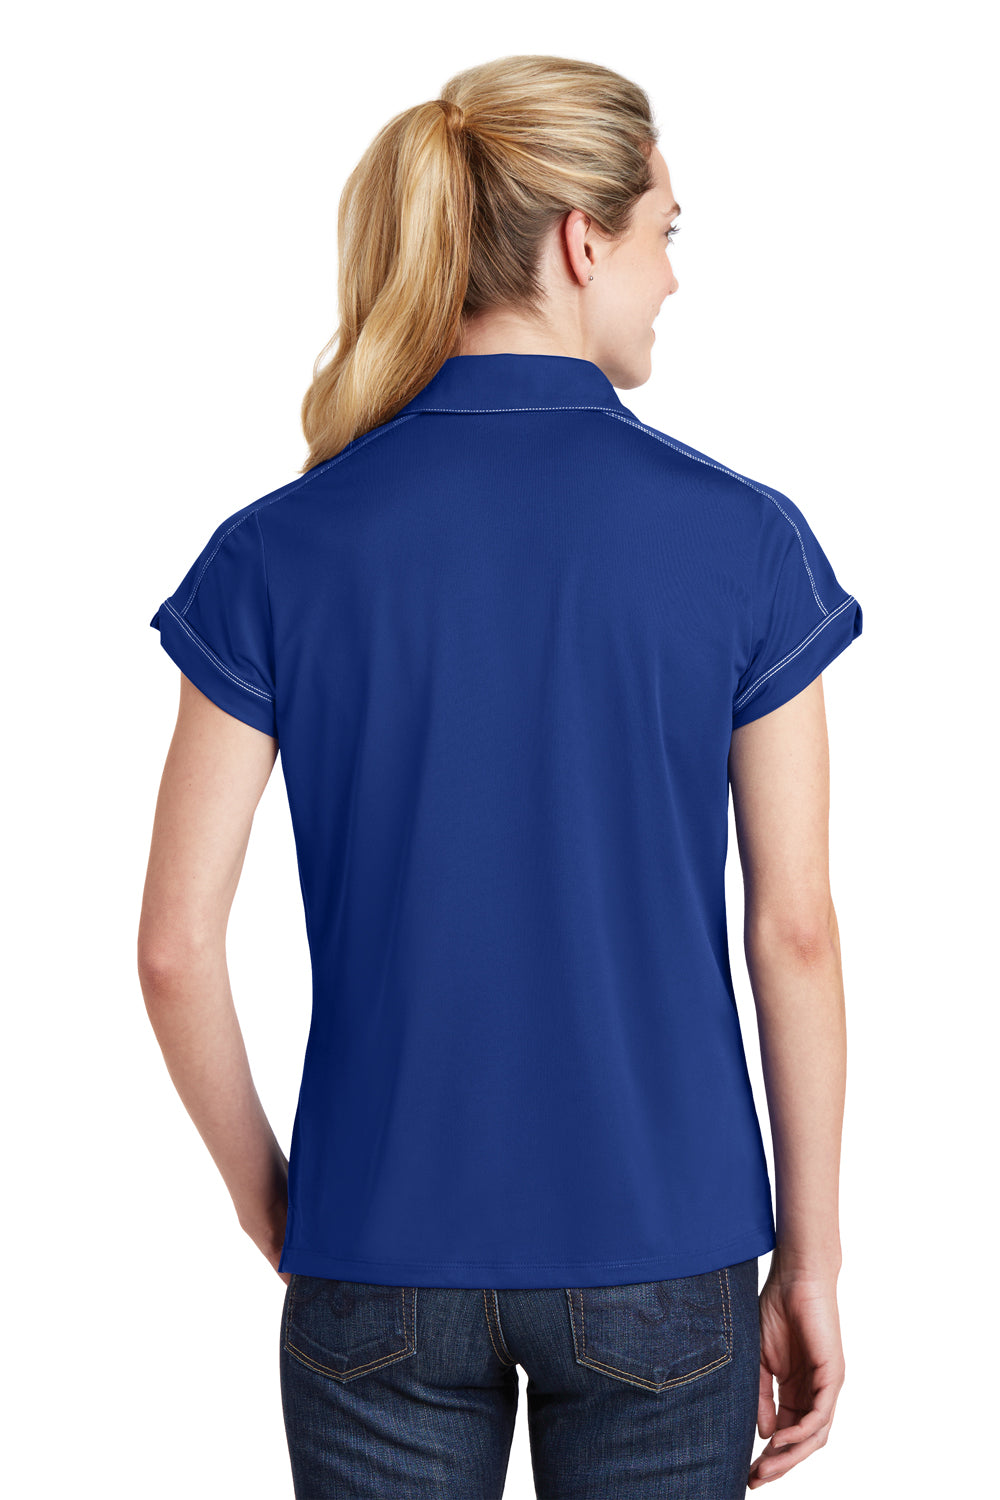 Sport-Tek LST659 Womens Sport-Wick Moisture Wicking Short Sleeve Polo Shirt Royal Blue Back